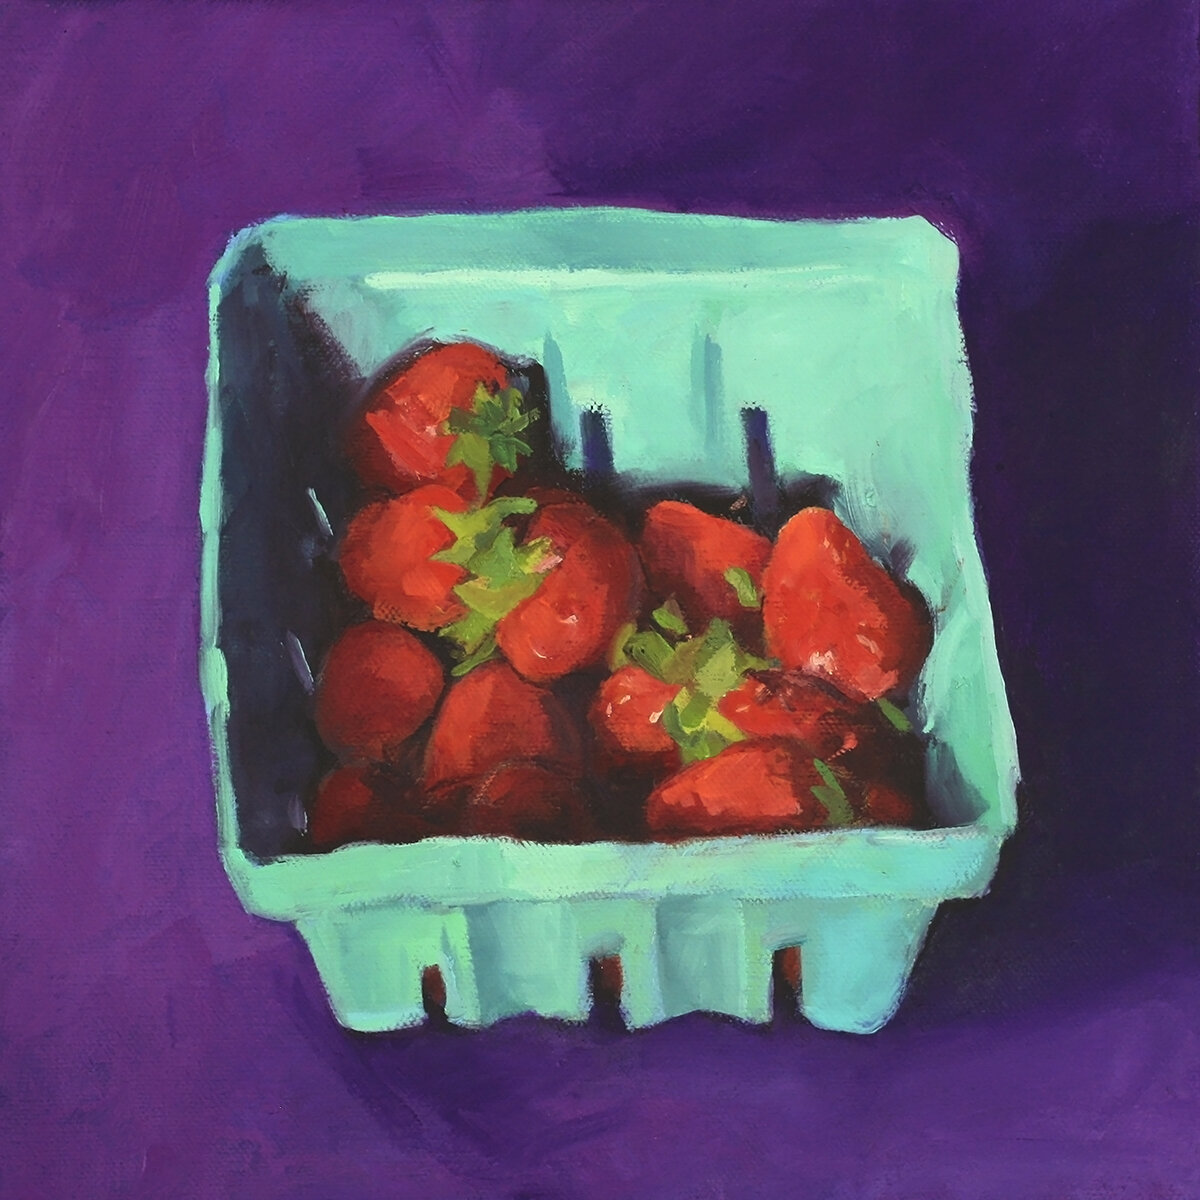 epson-Strawberries on purple-reference.jpg